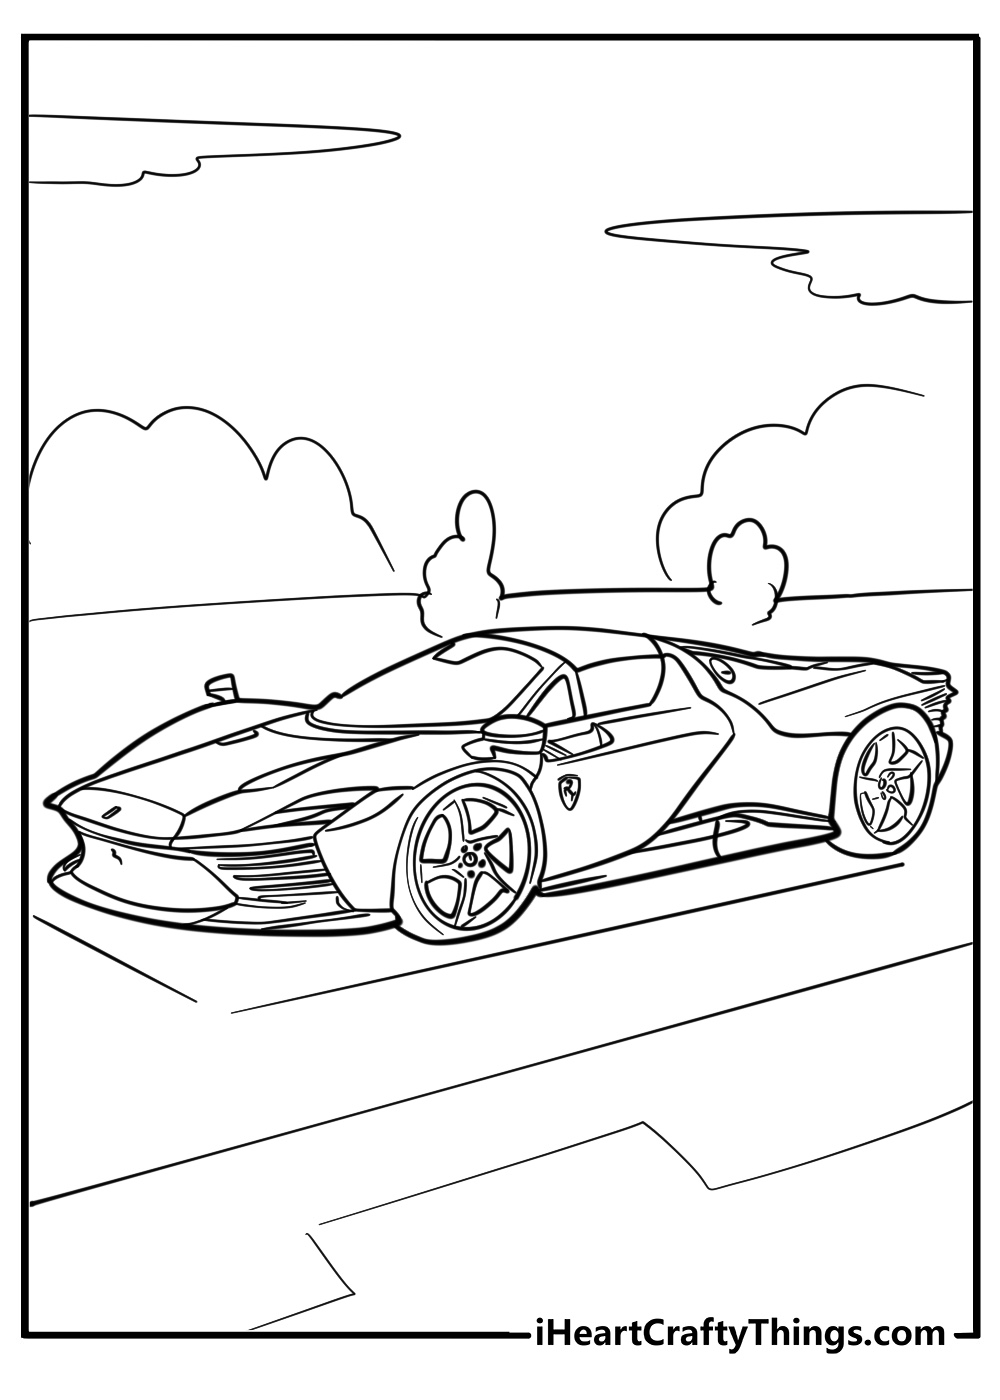 Ferrari daytona sp3 coloring sheet